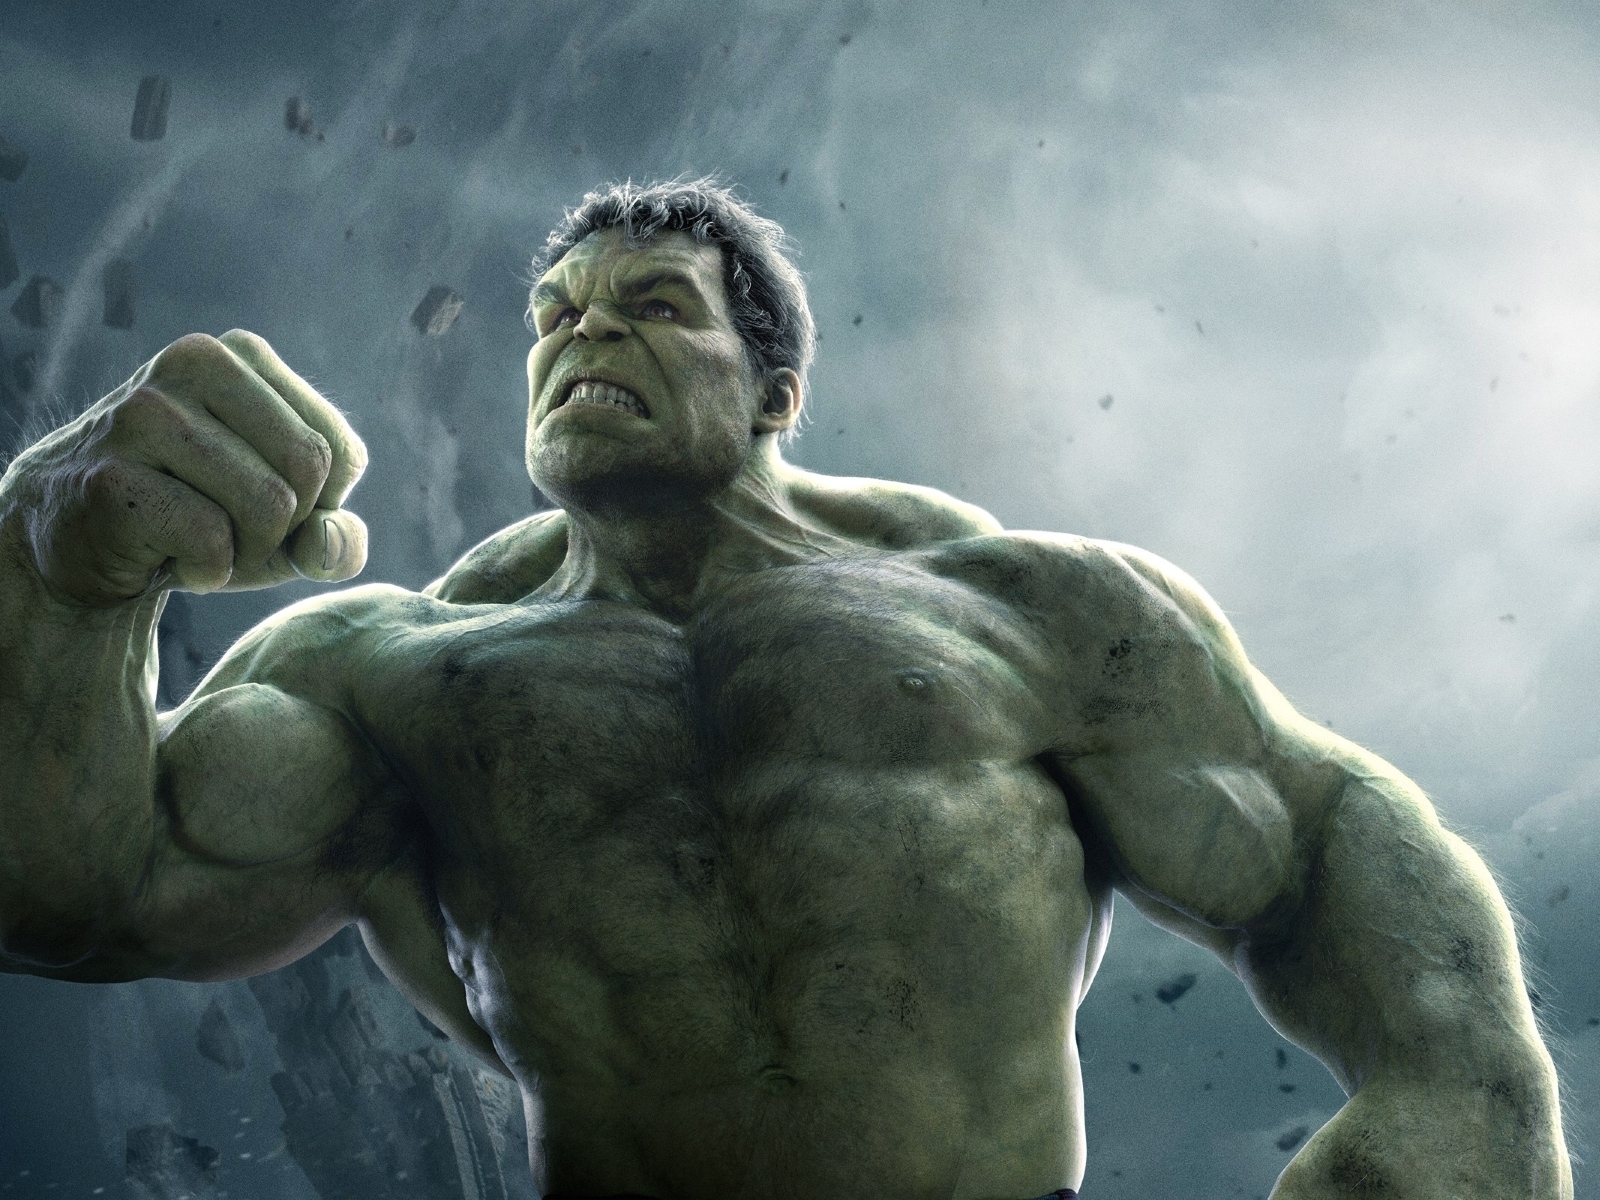 Hulk In Avengers Infinity War Full HD 2k Wallpaper